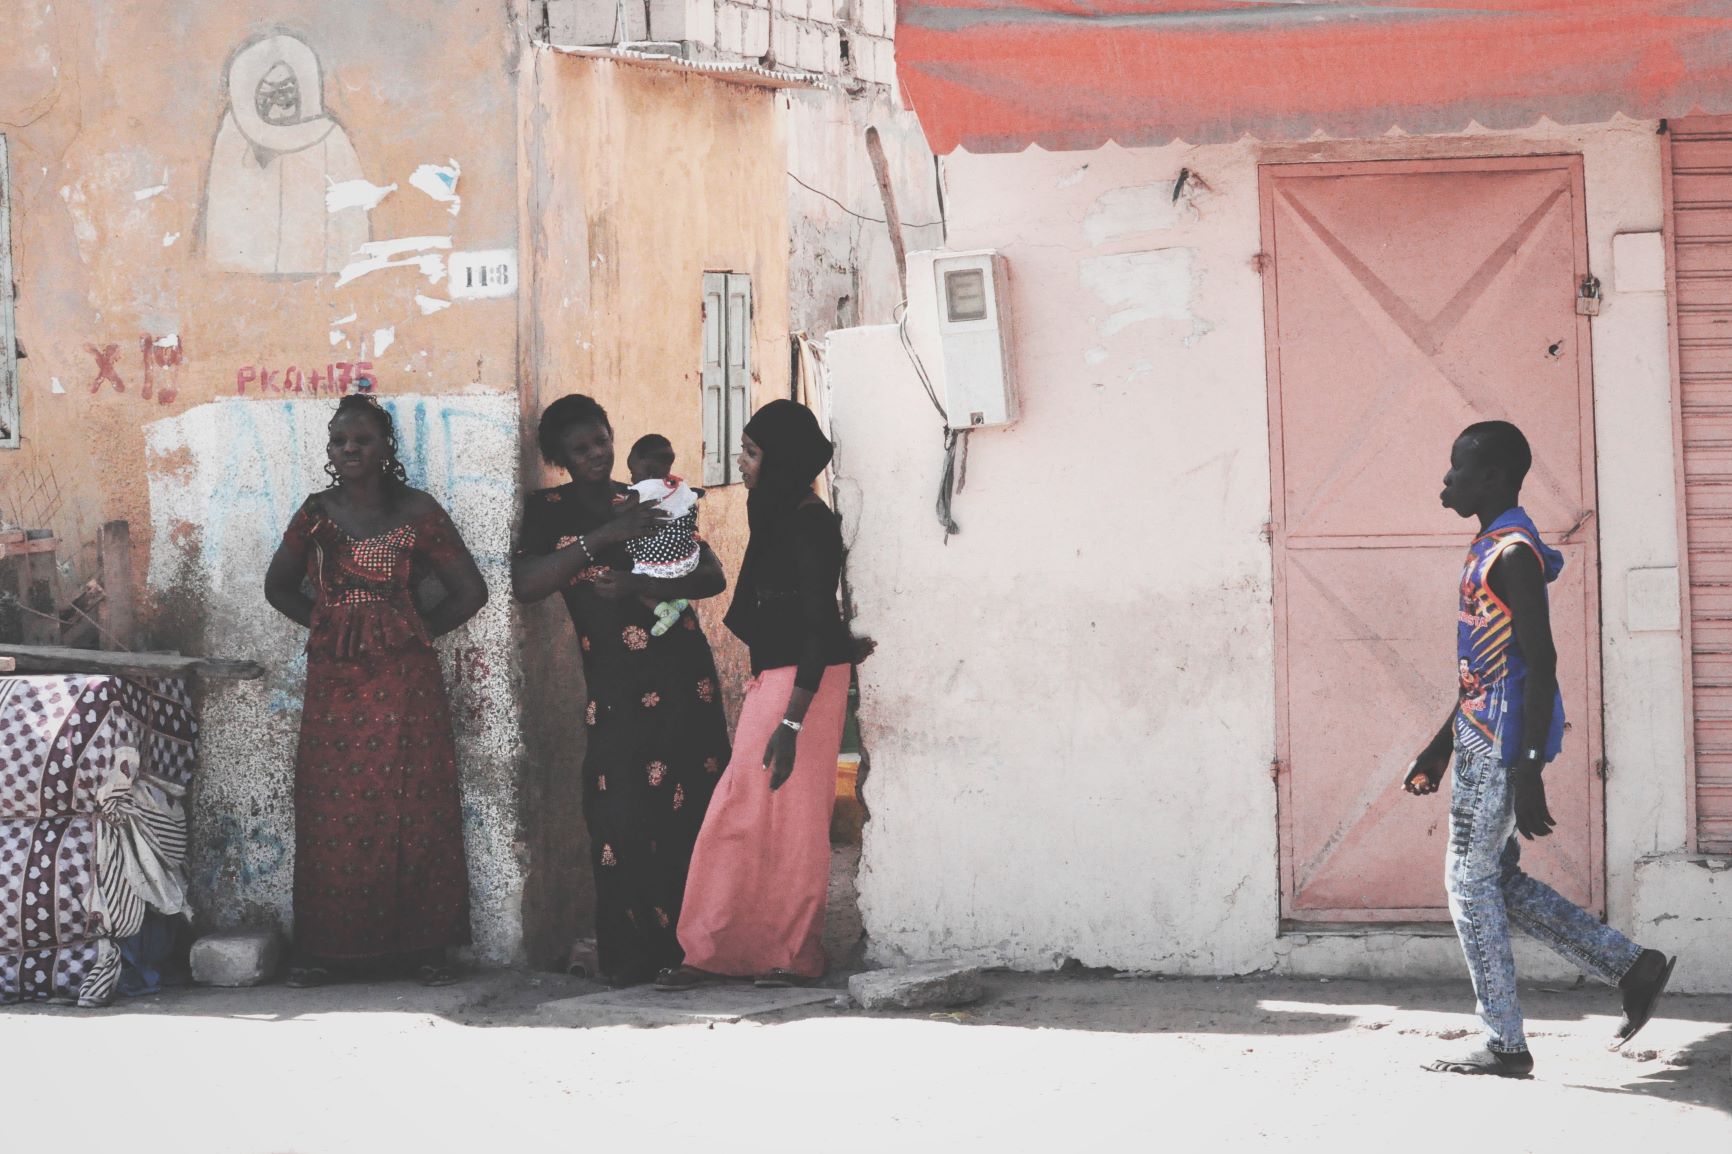 Senegalese women